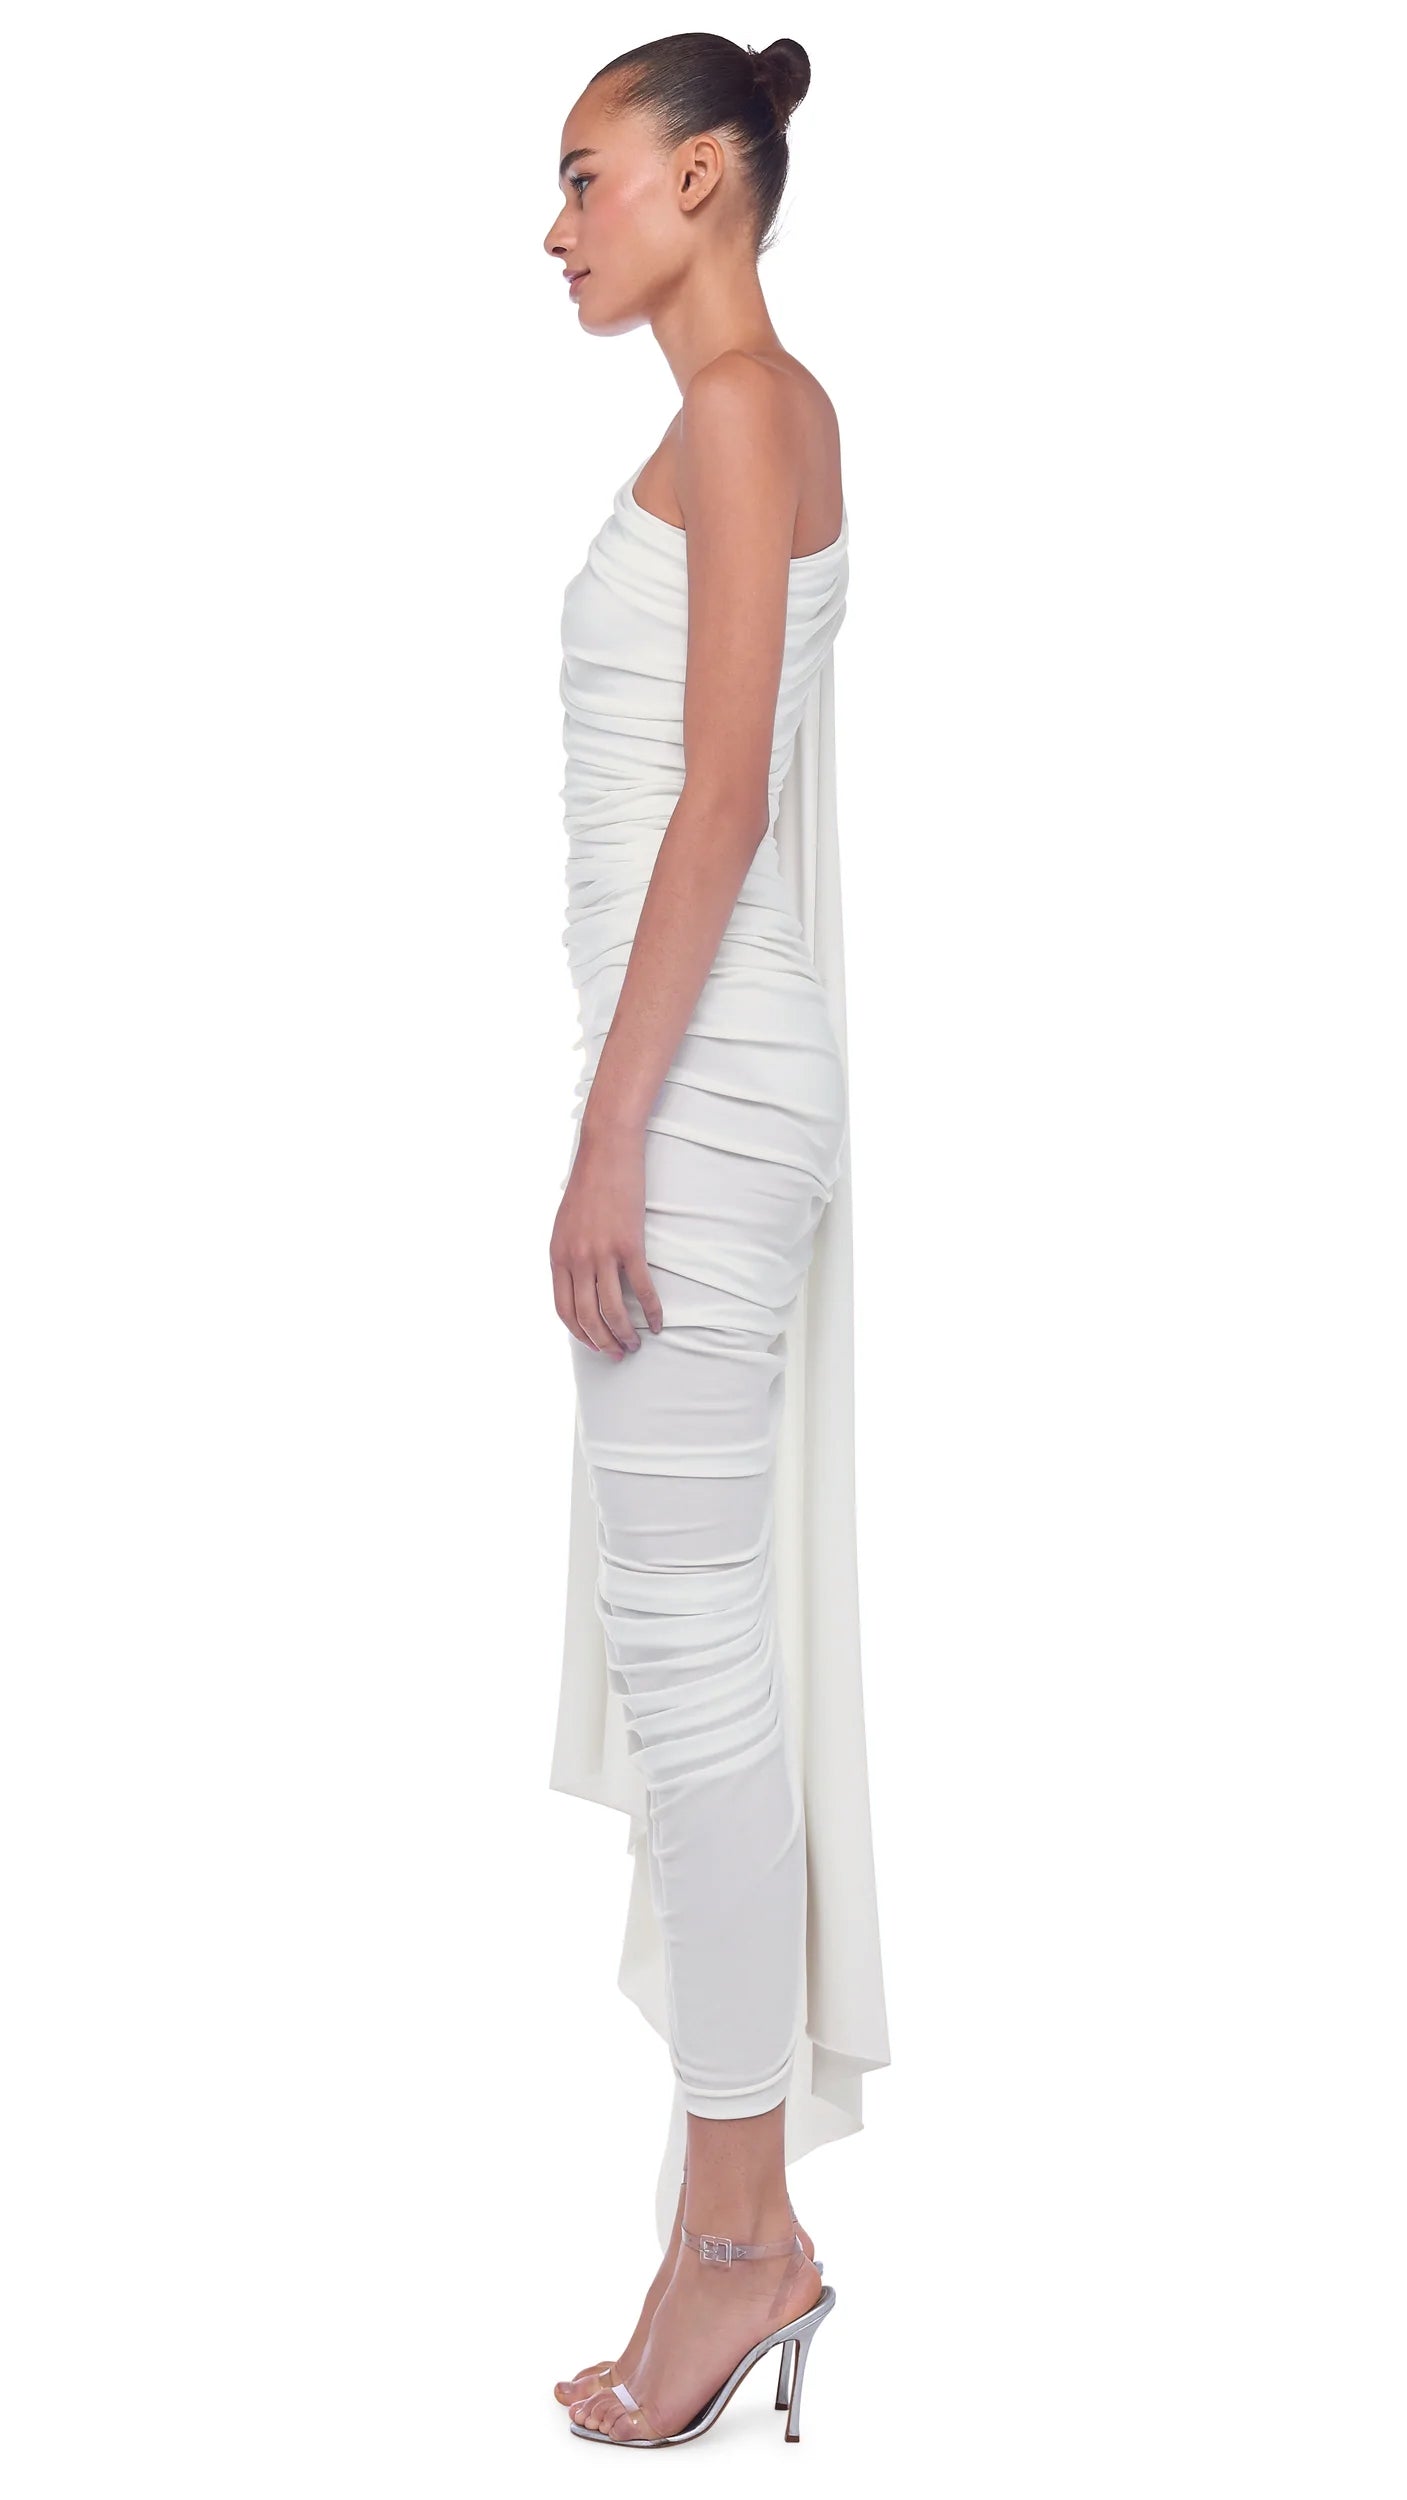 Shop Norma Kamali Diana Ruched One-Shoulder Midi-Dress